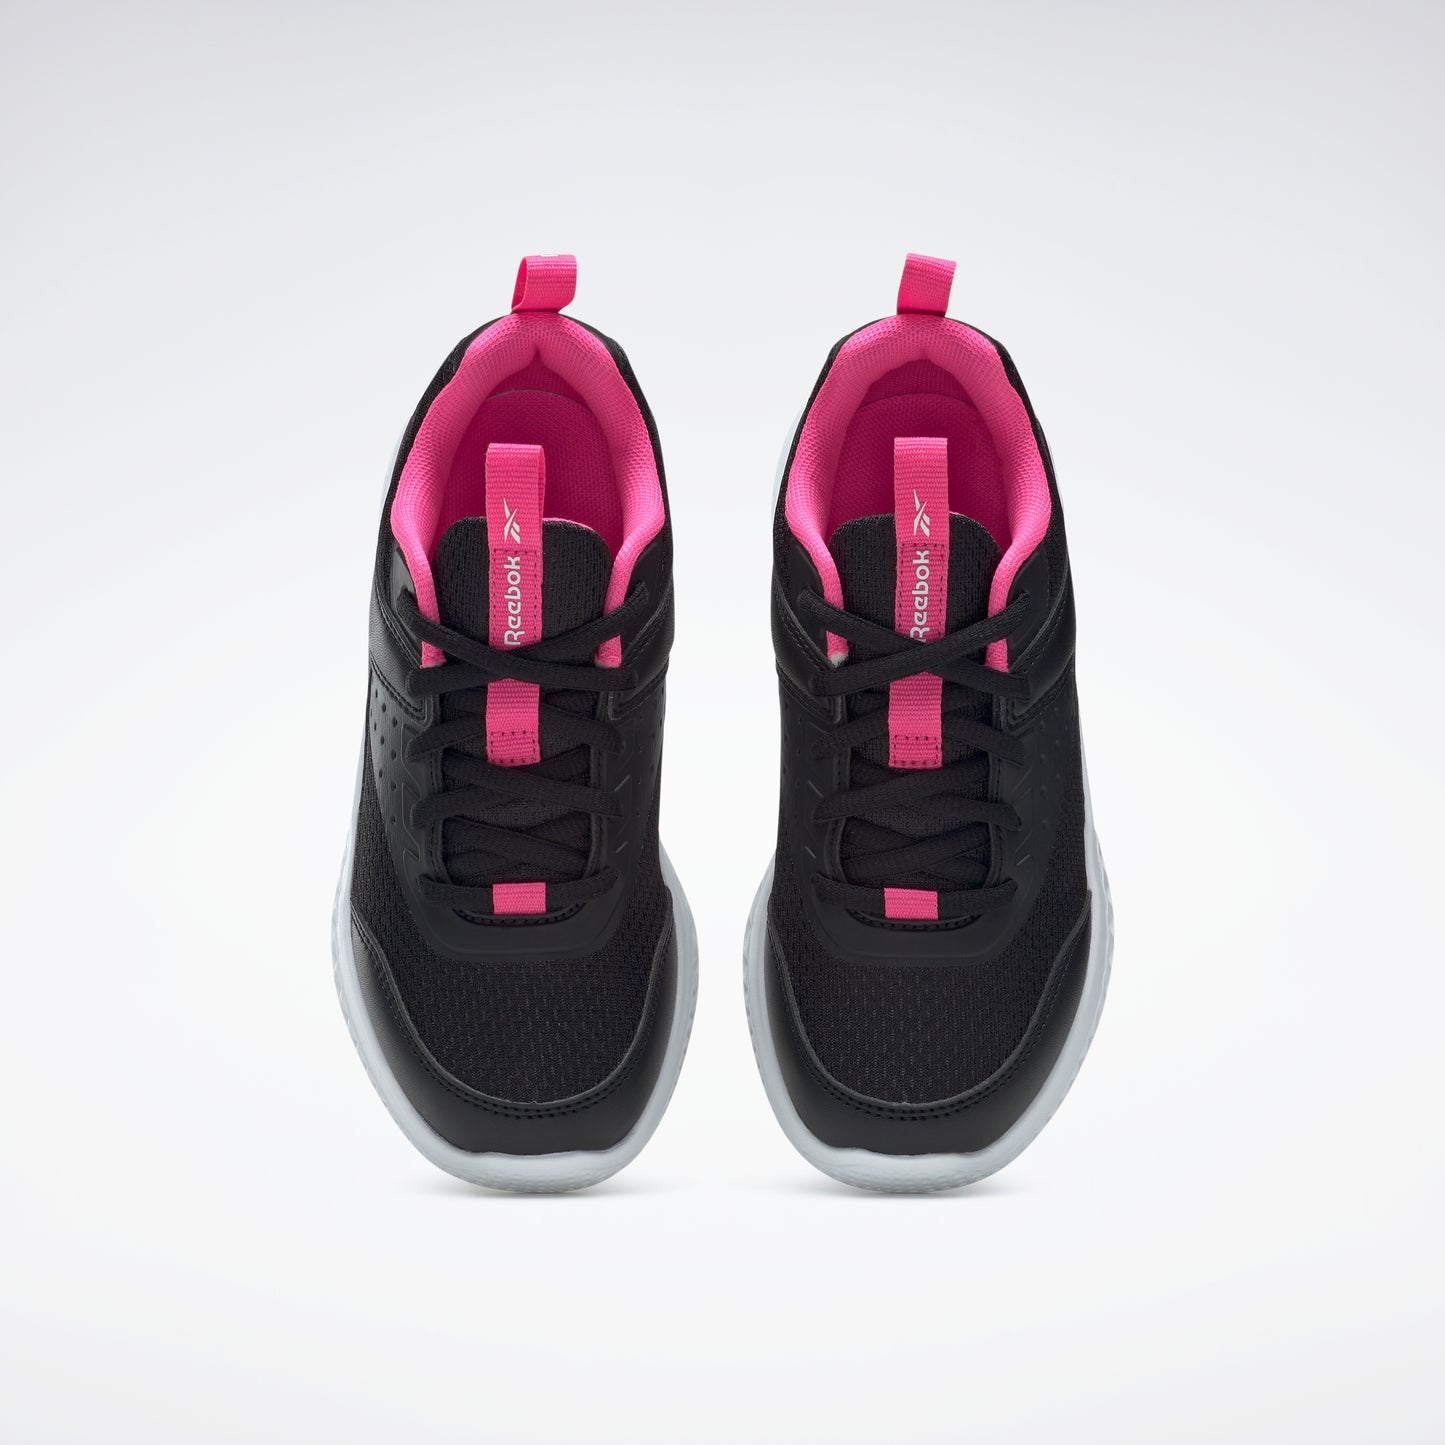 Reebok Footwear Kids Reebok Rush Runner 4 Shoes Child Cblack/Atopnk/Ftwwht